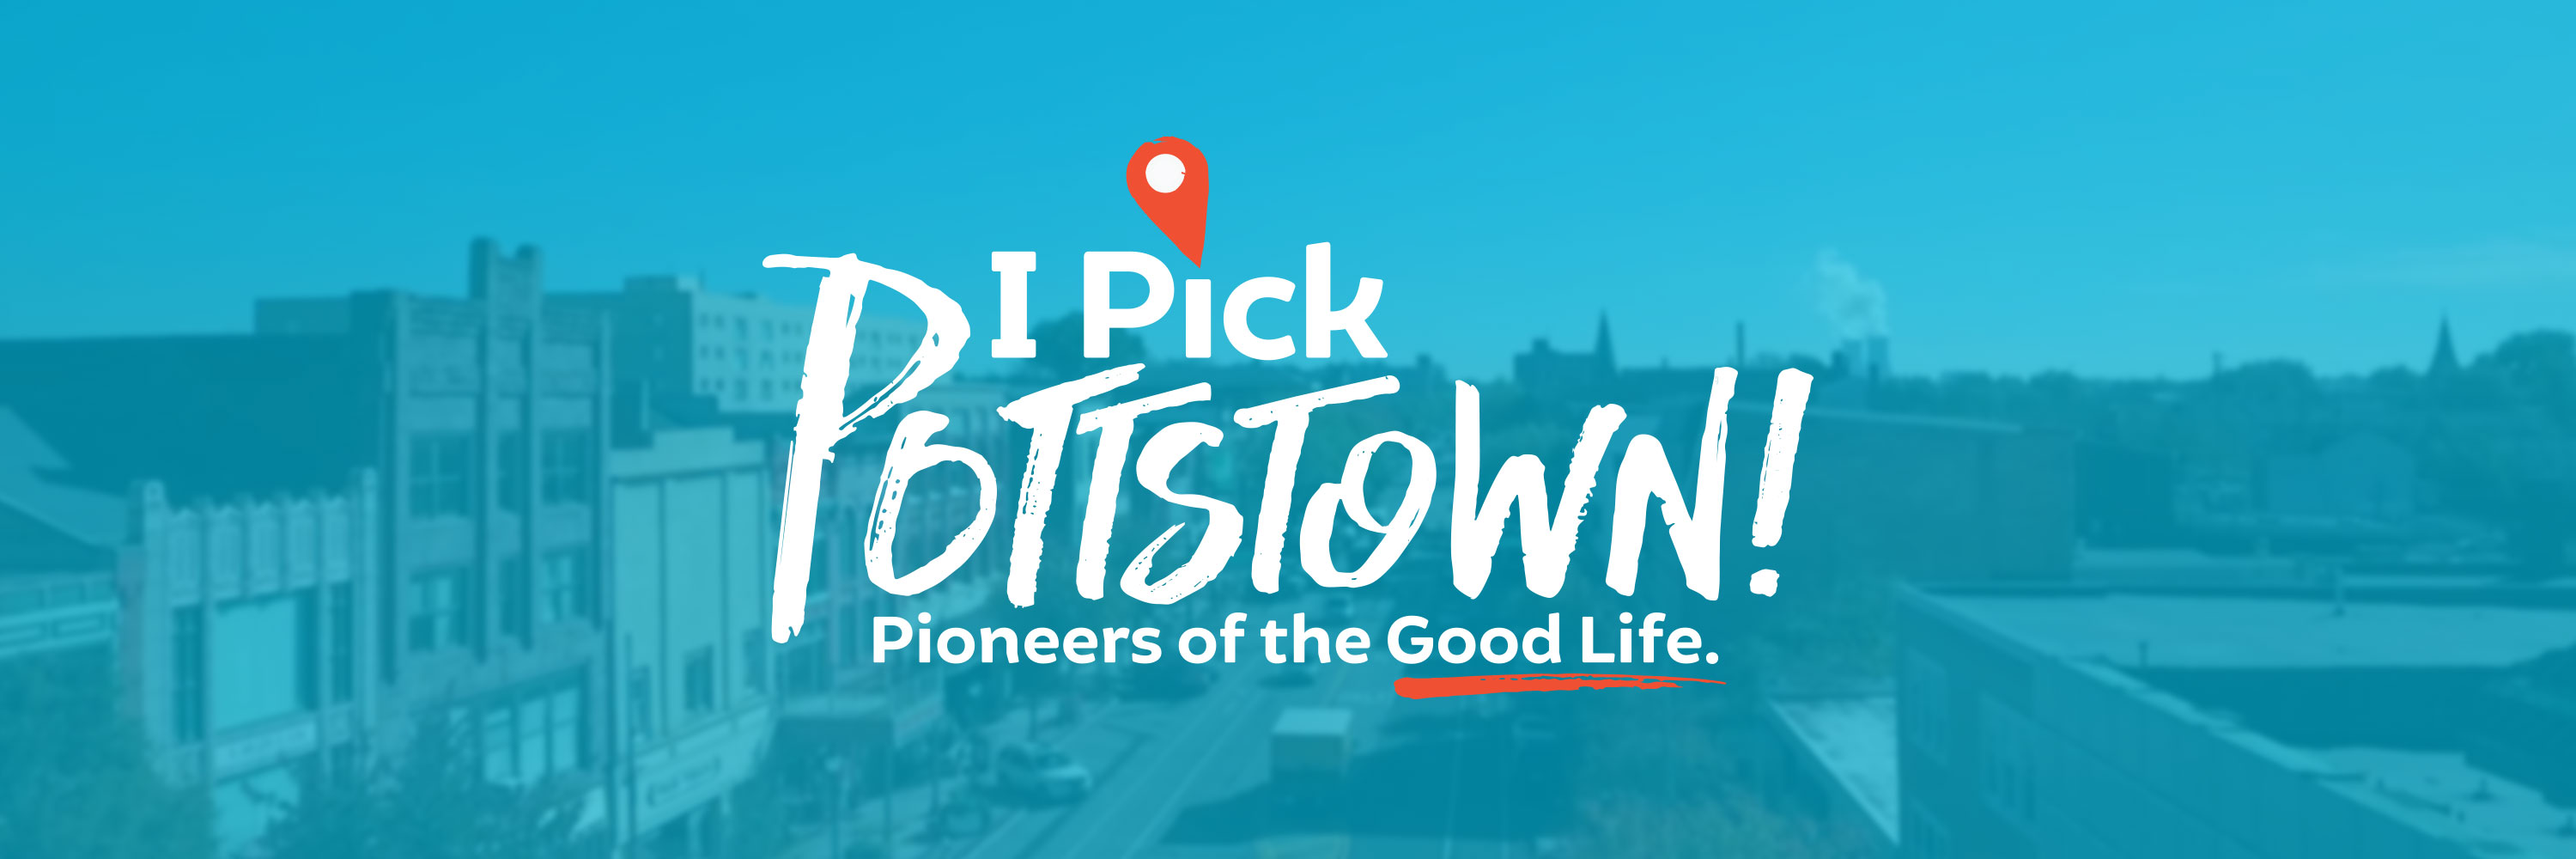 I Pick Potttstown Municipal Branding Campaign